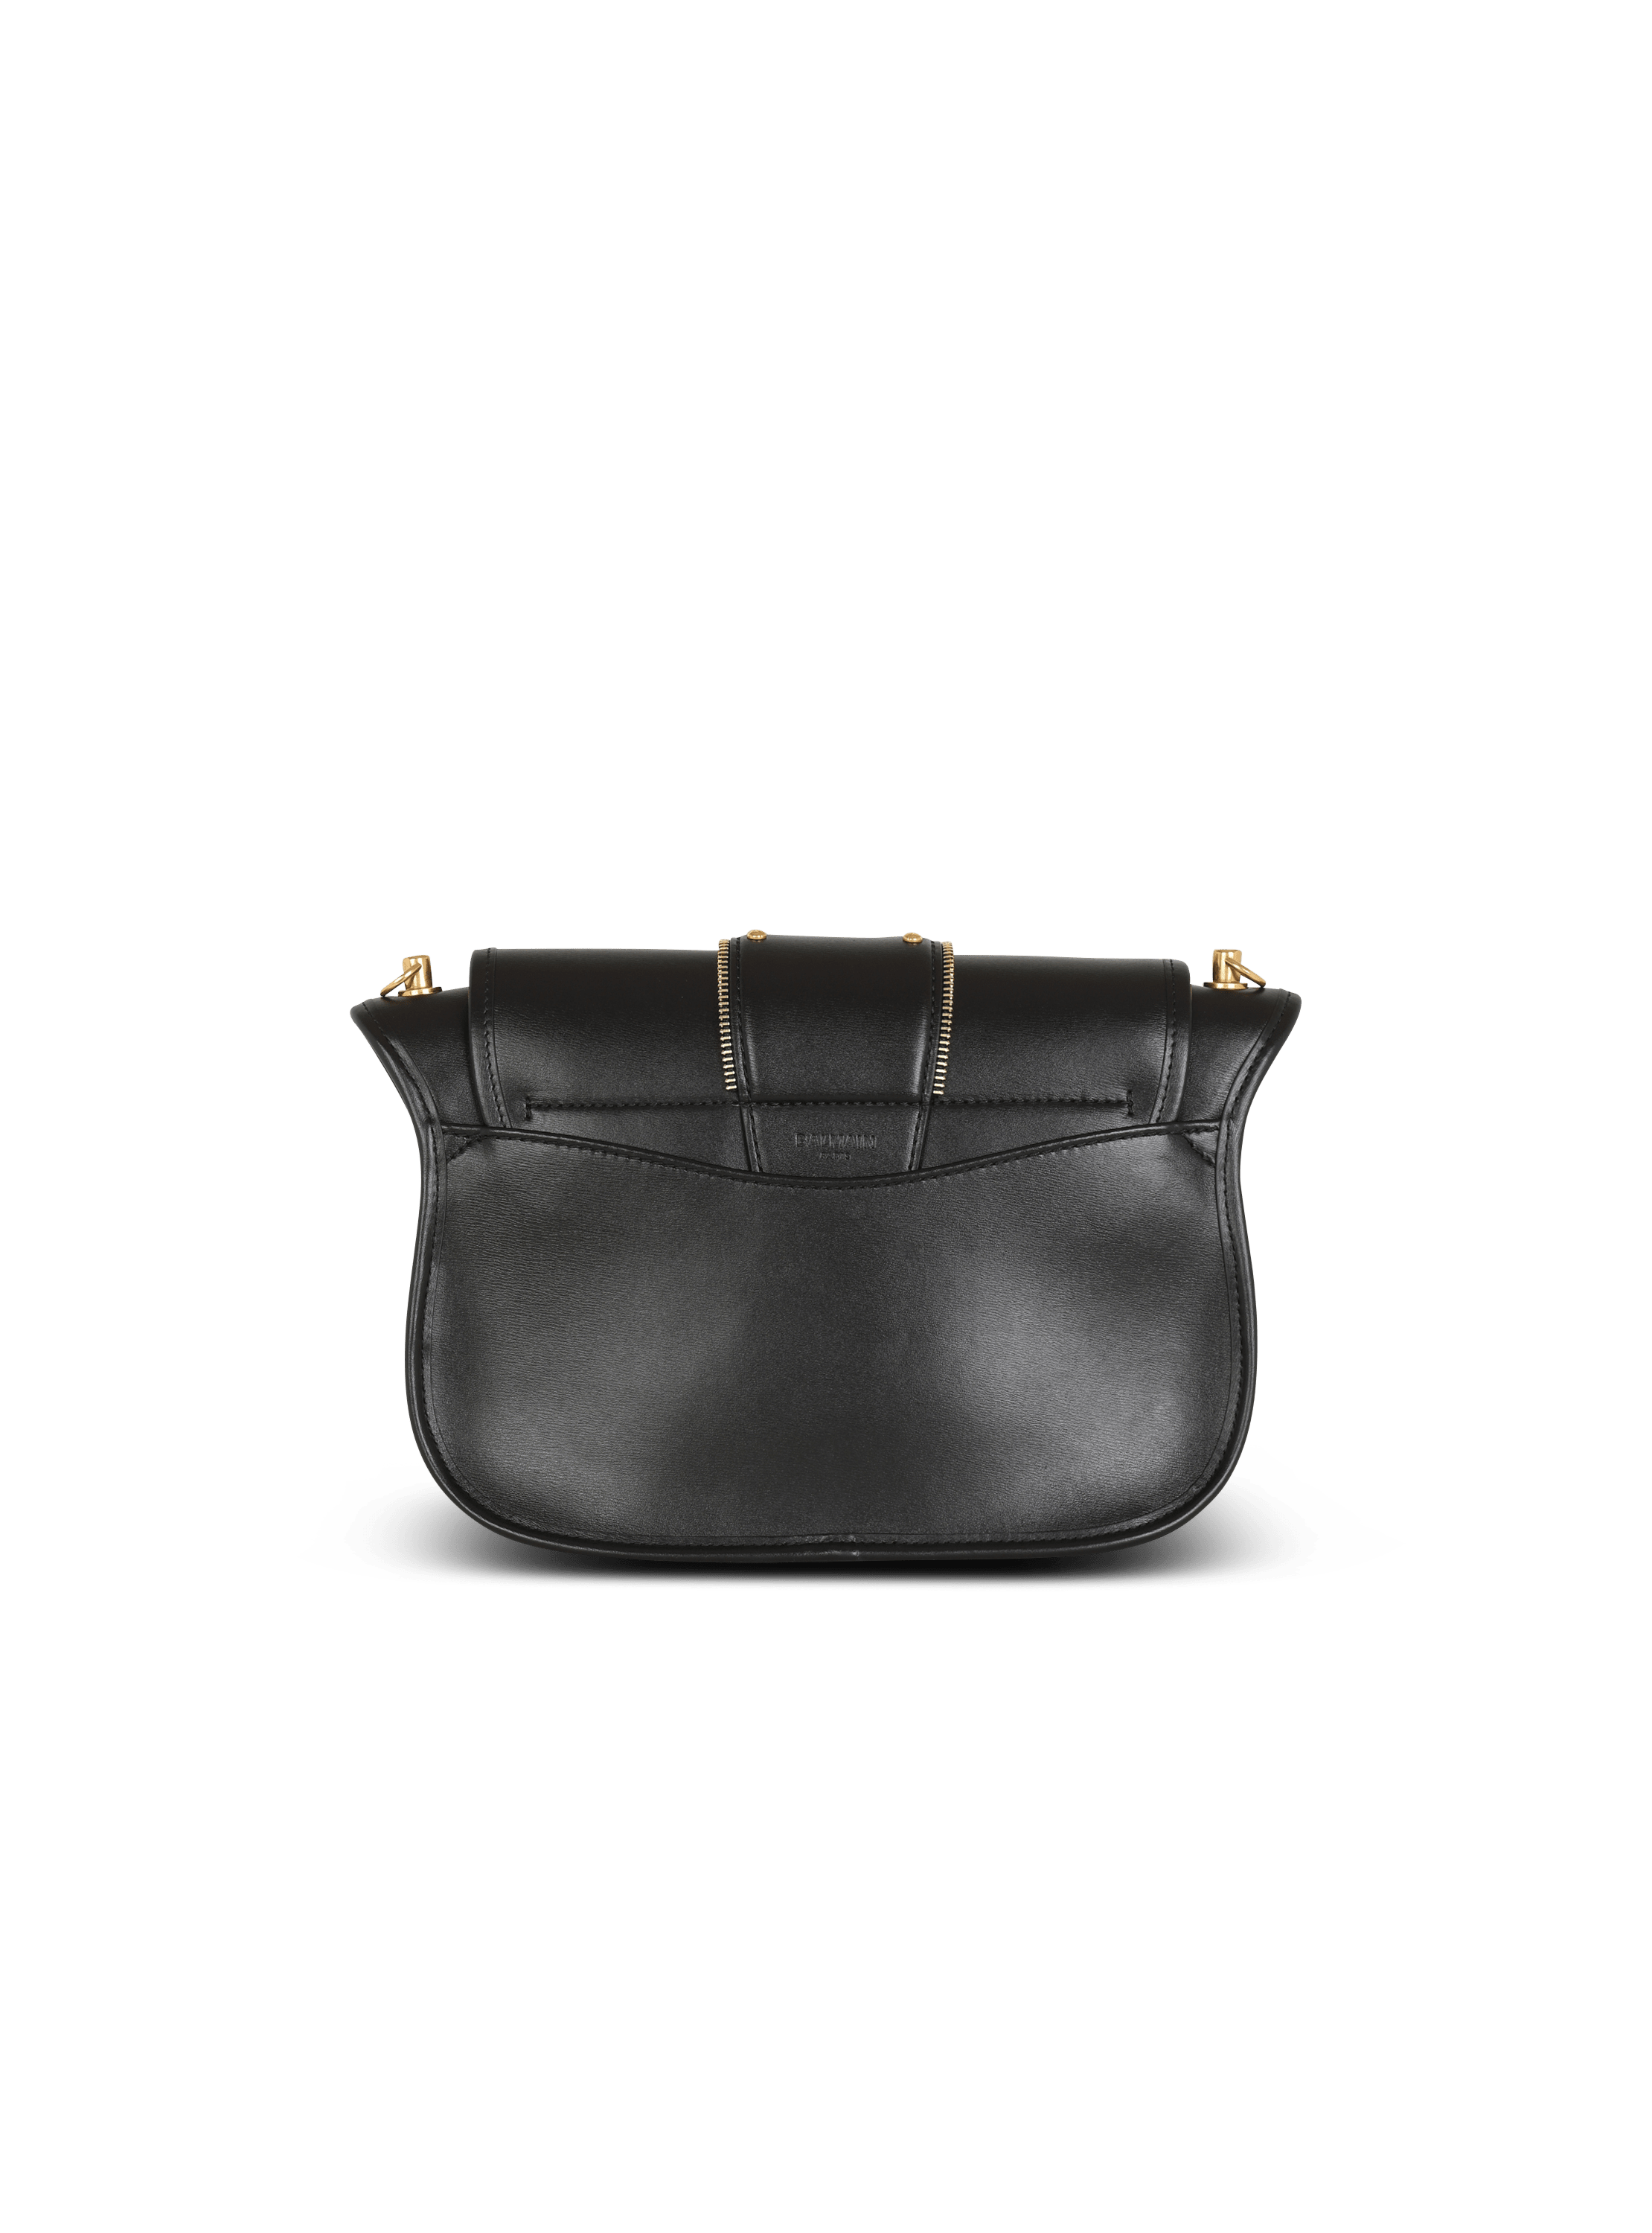 Balmain Blaze Small Leather Shoulder Bag